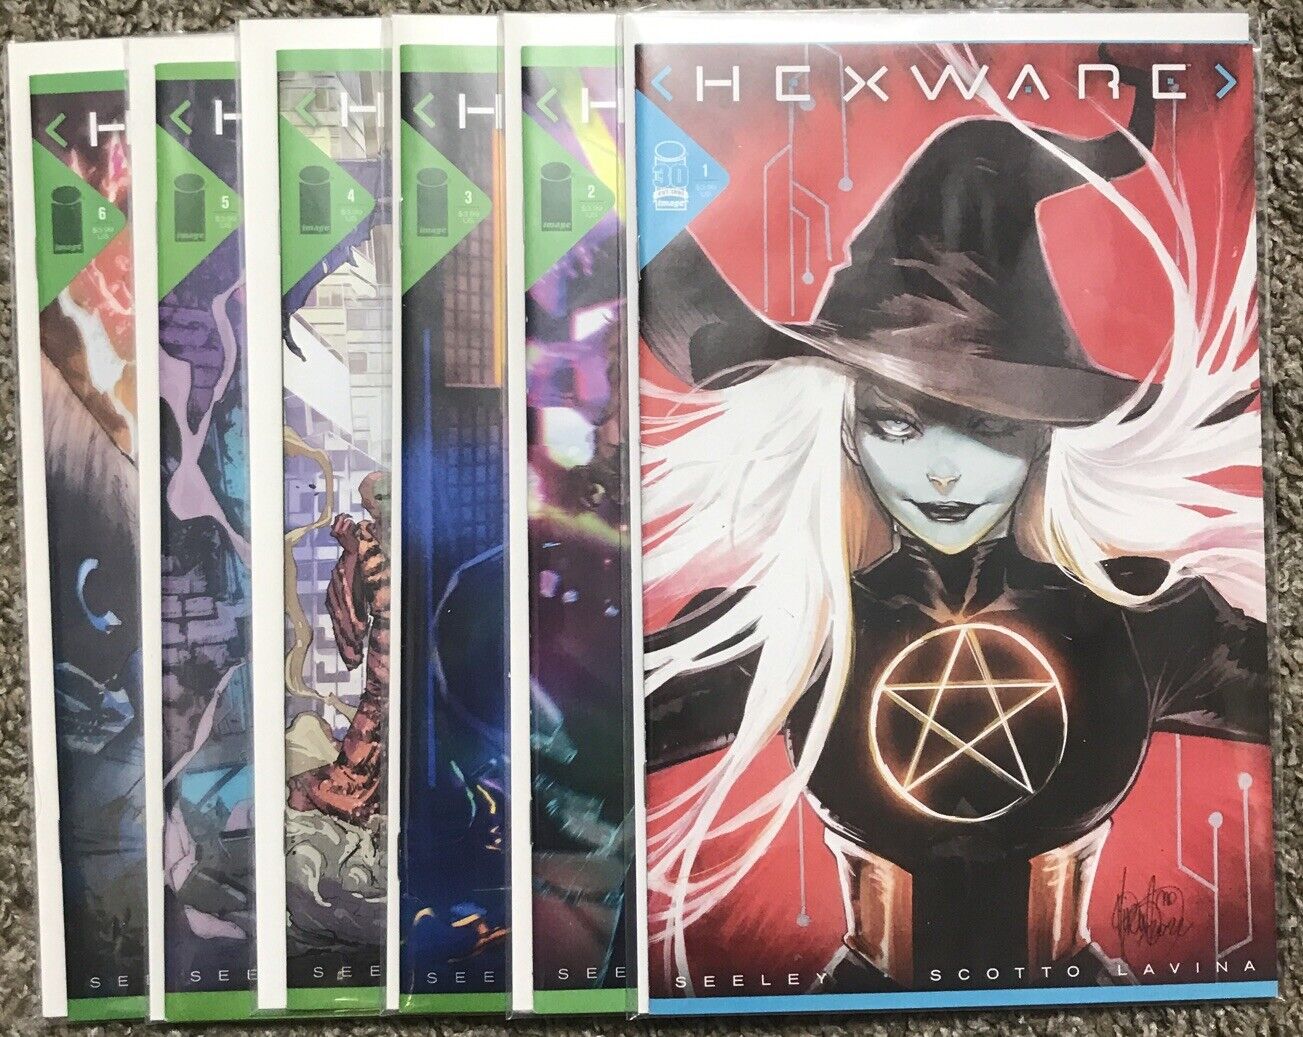 Hexware #1-6 (Image Comics)